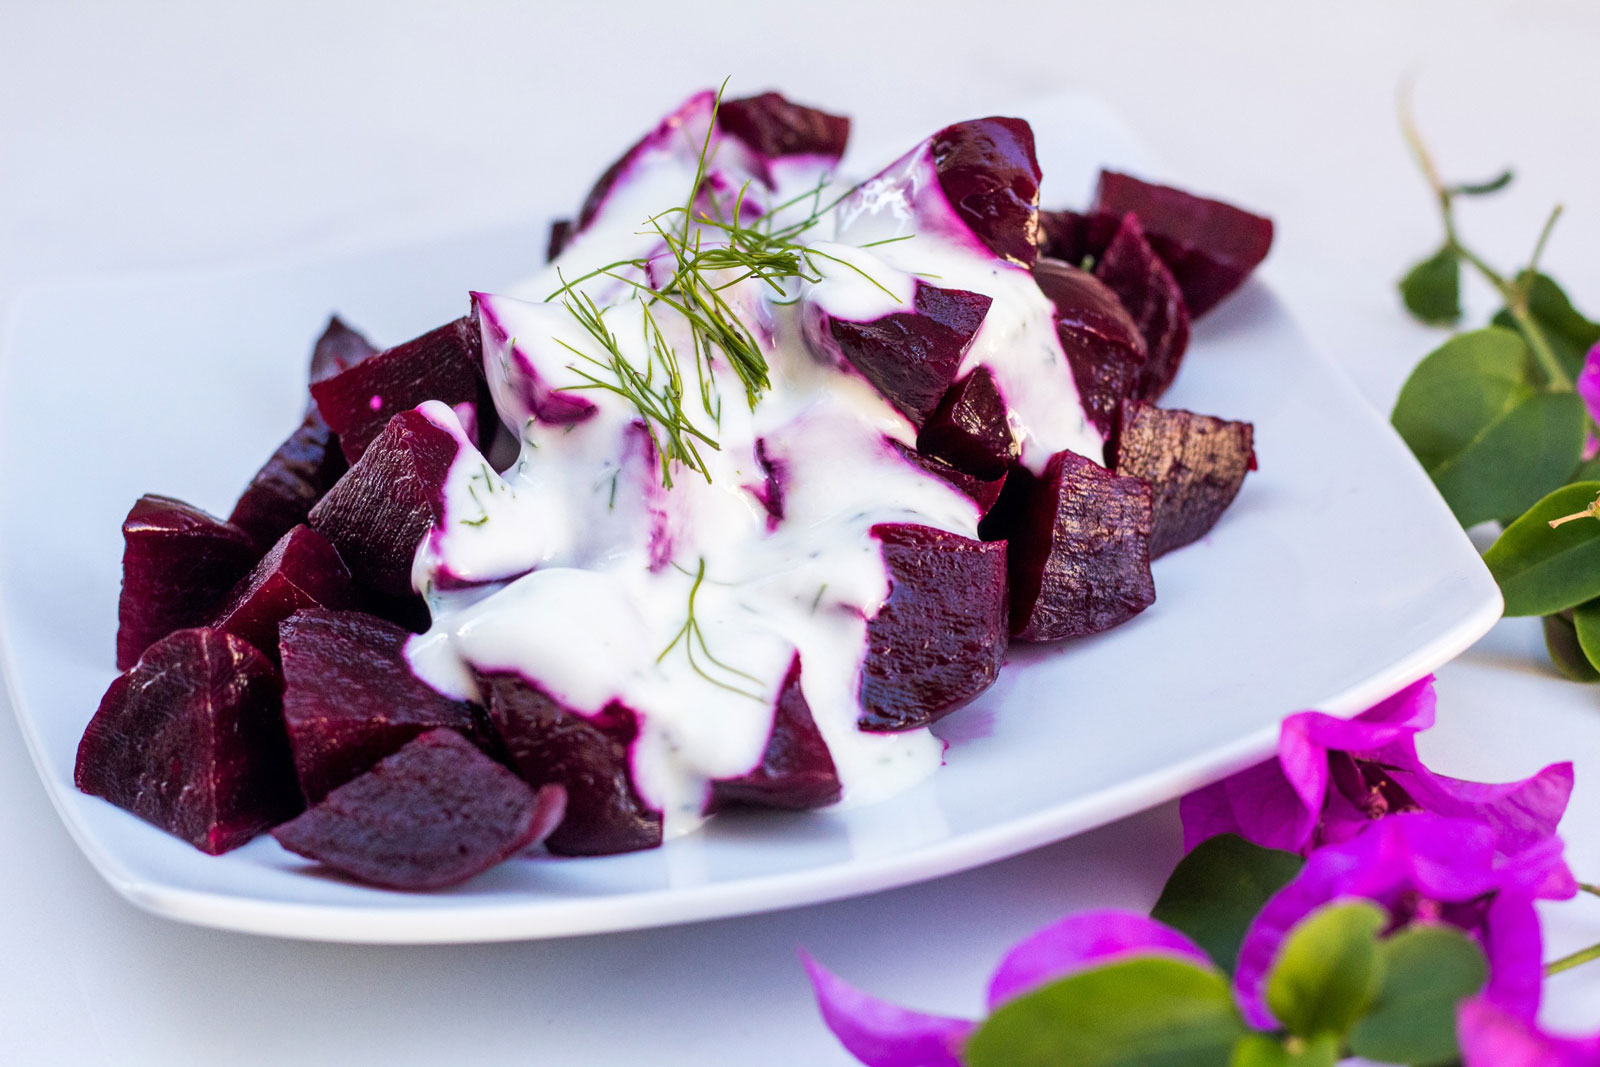 greek beet salad with a creamy yoghurt dressing (panzarosalata)